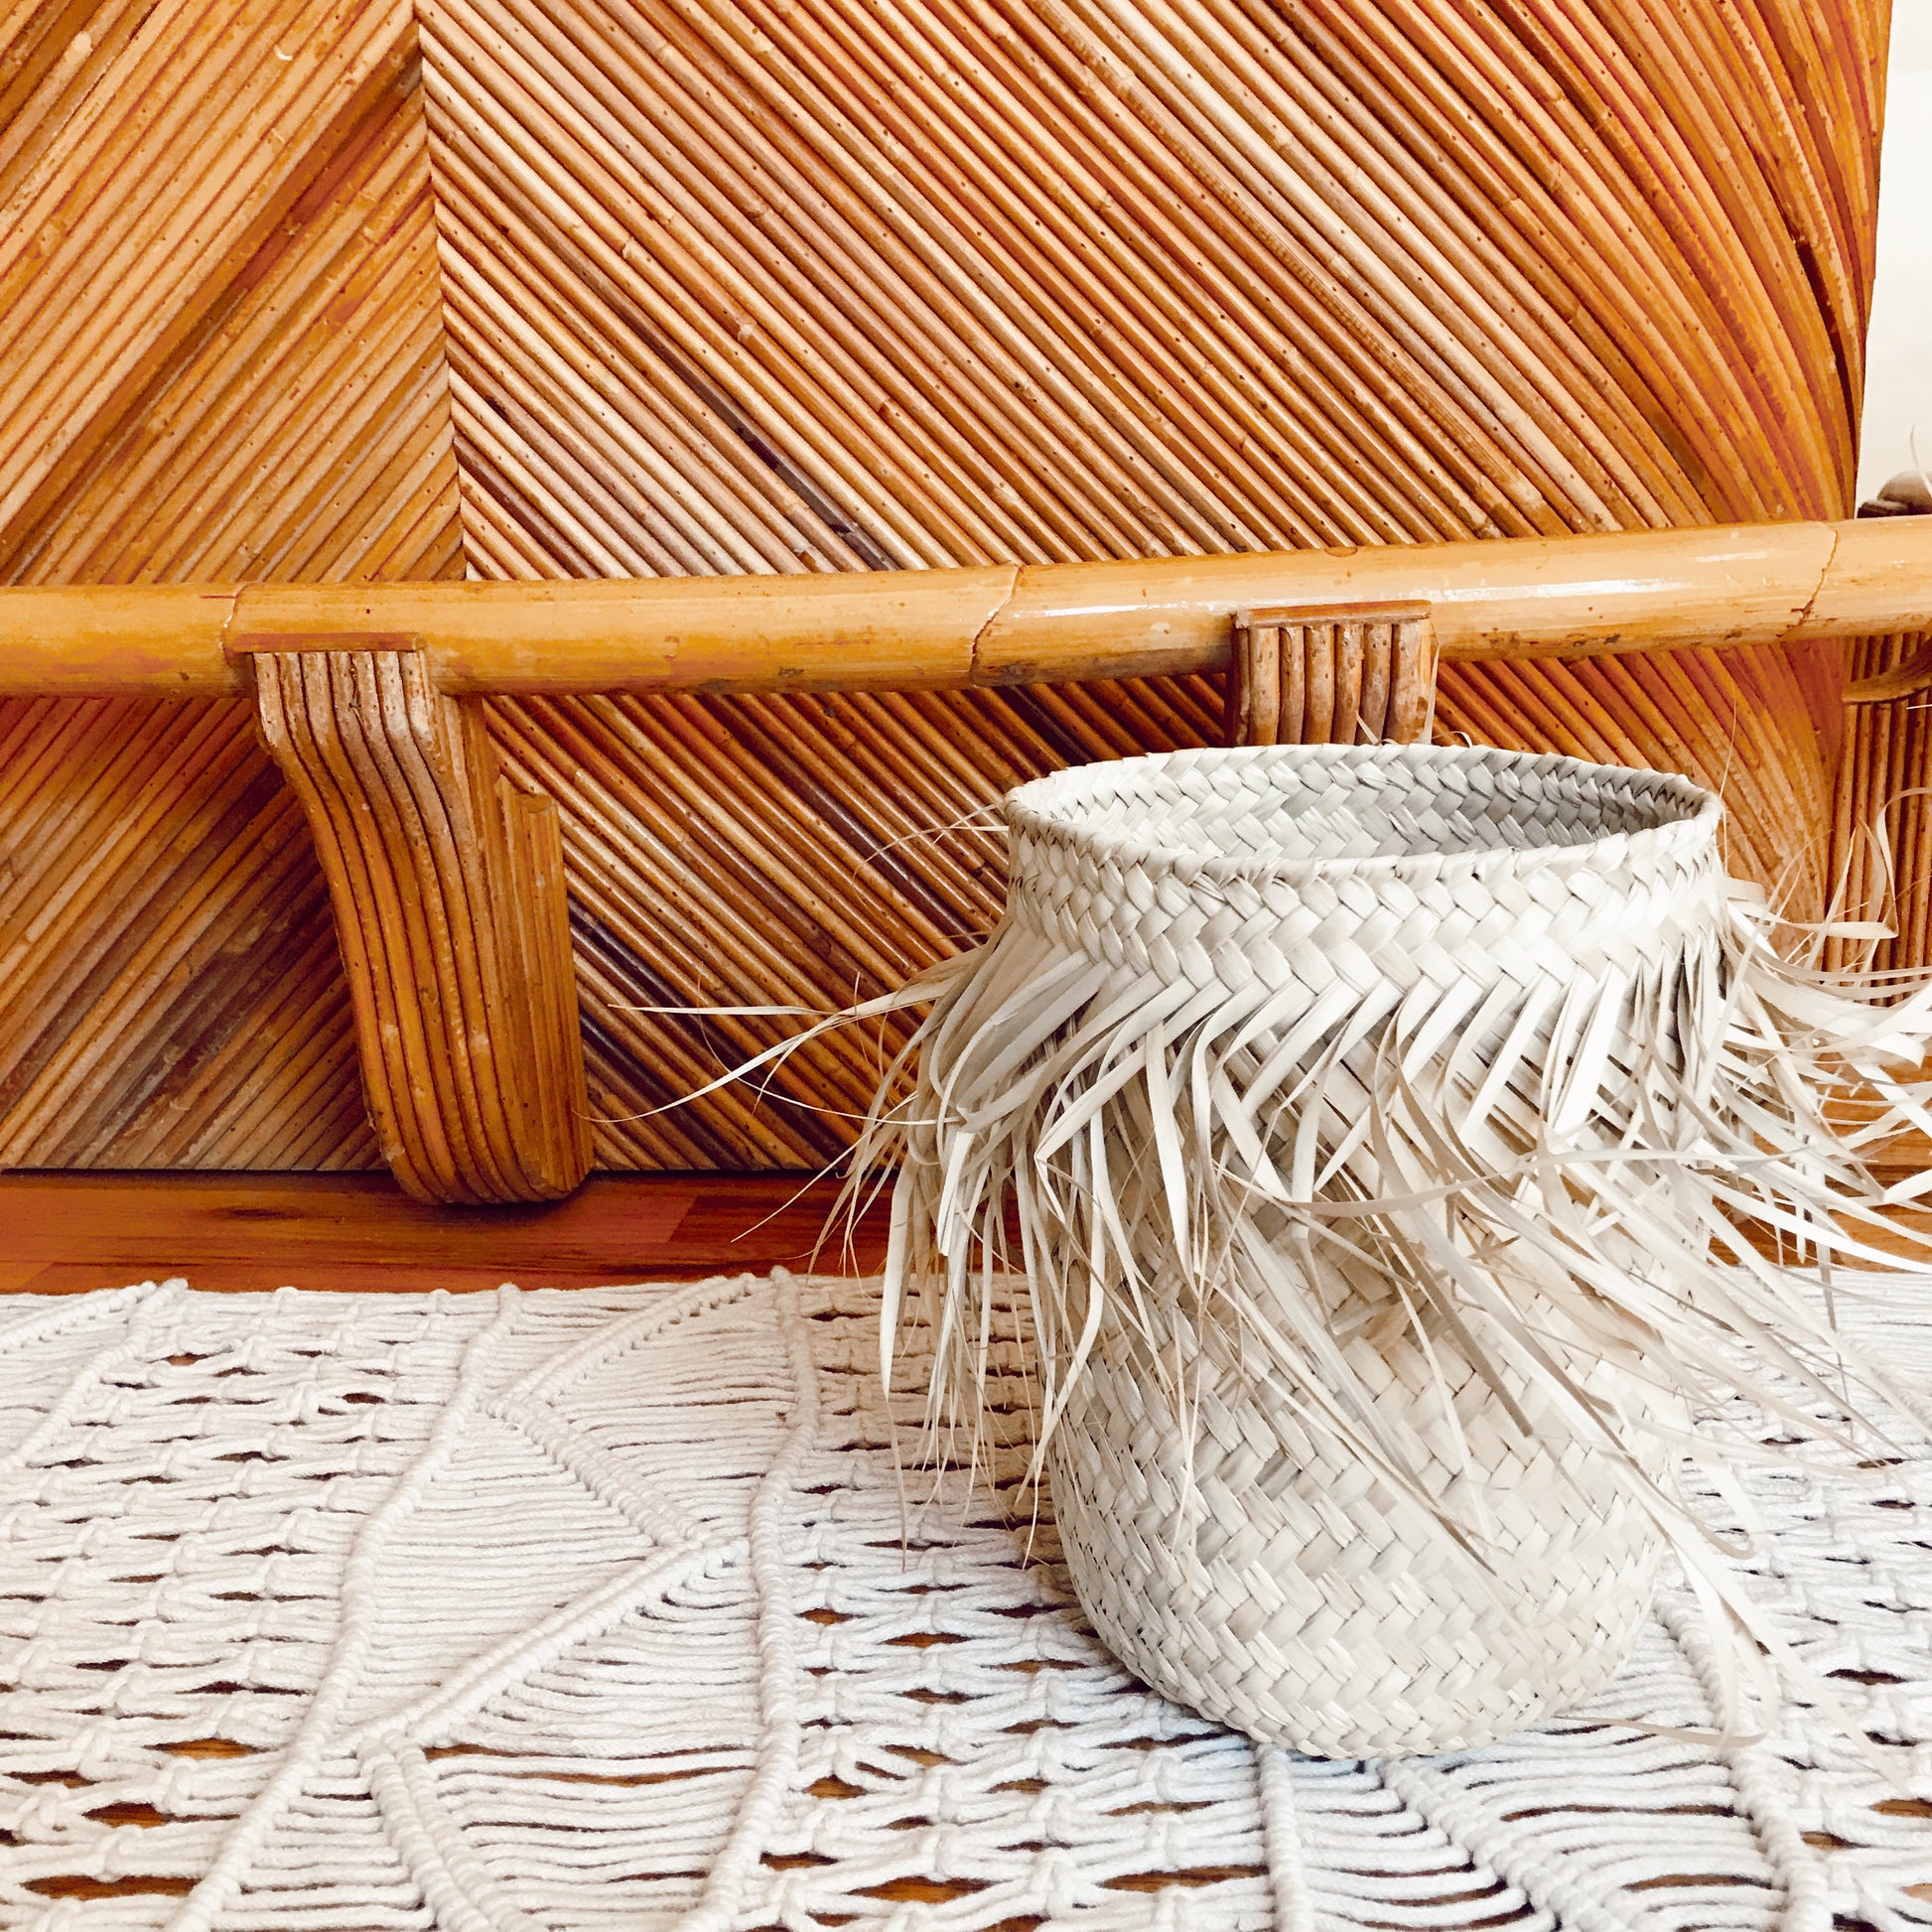 Small Palm Basket, Woven Storage Baskets